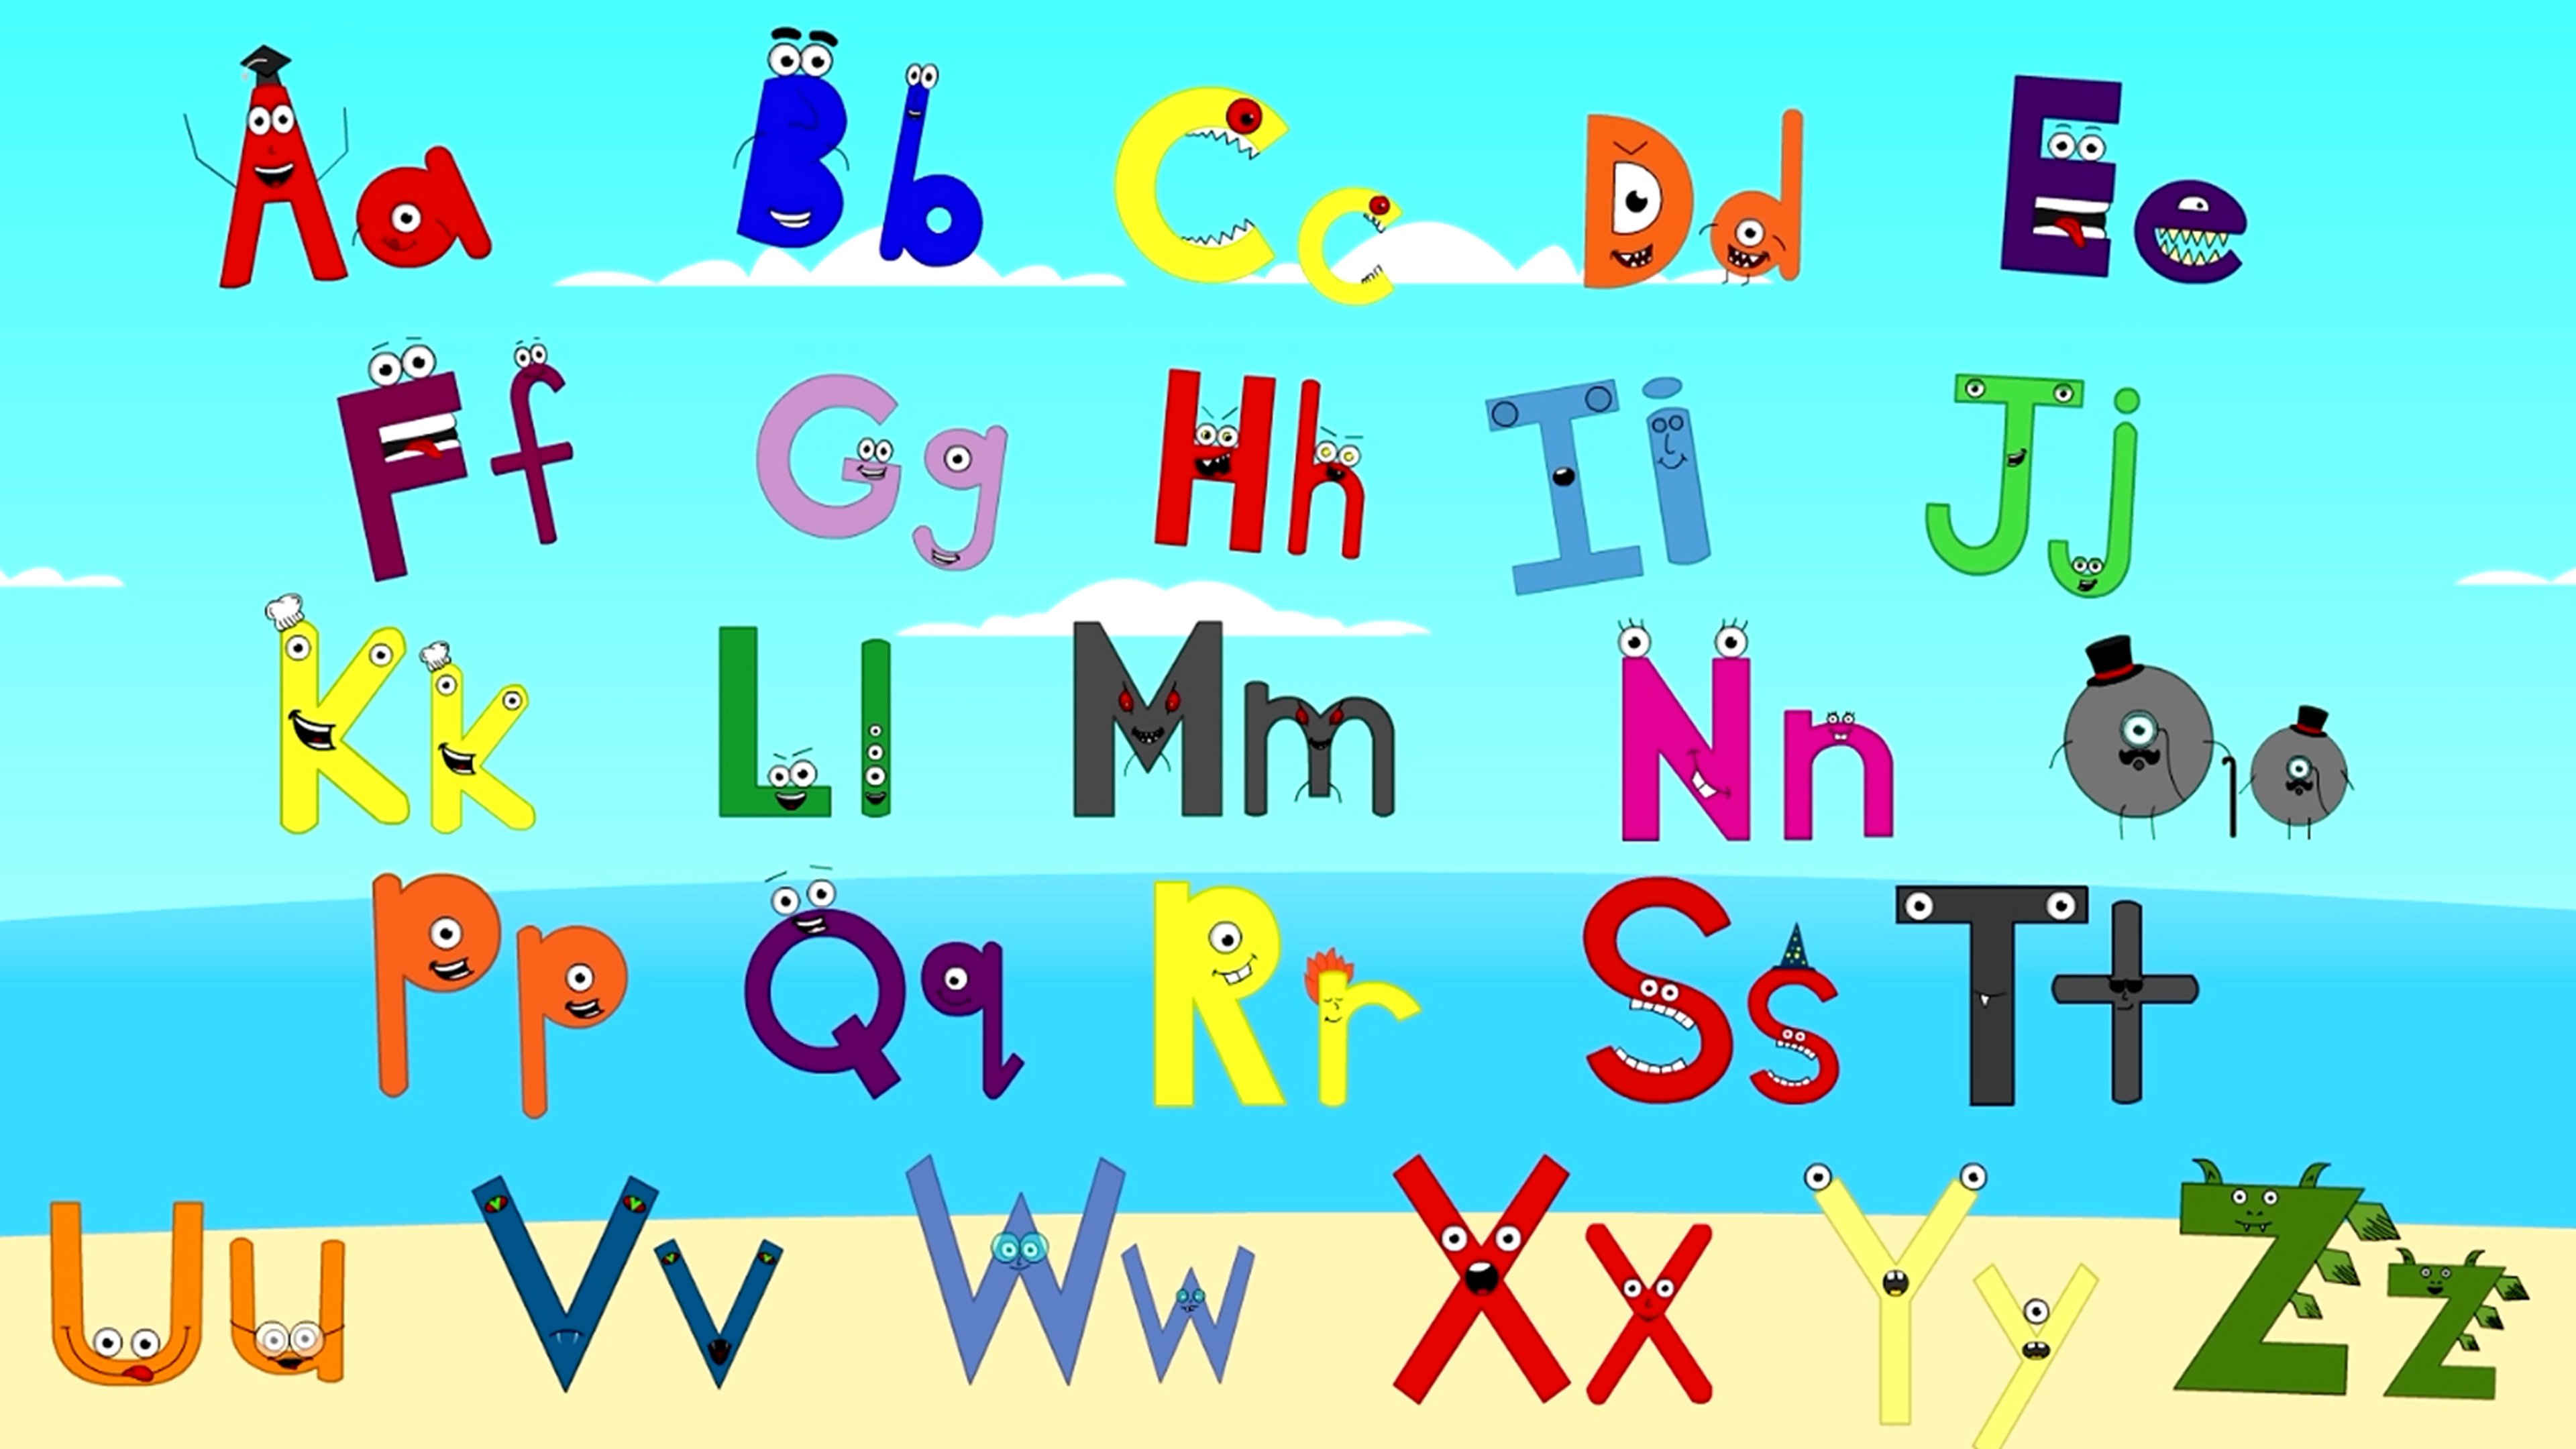 alphabet song